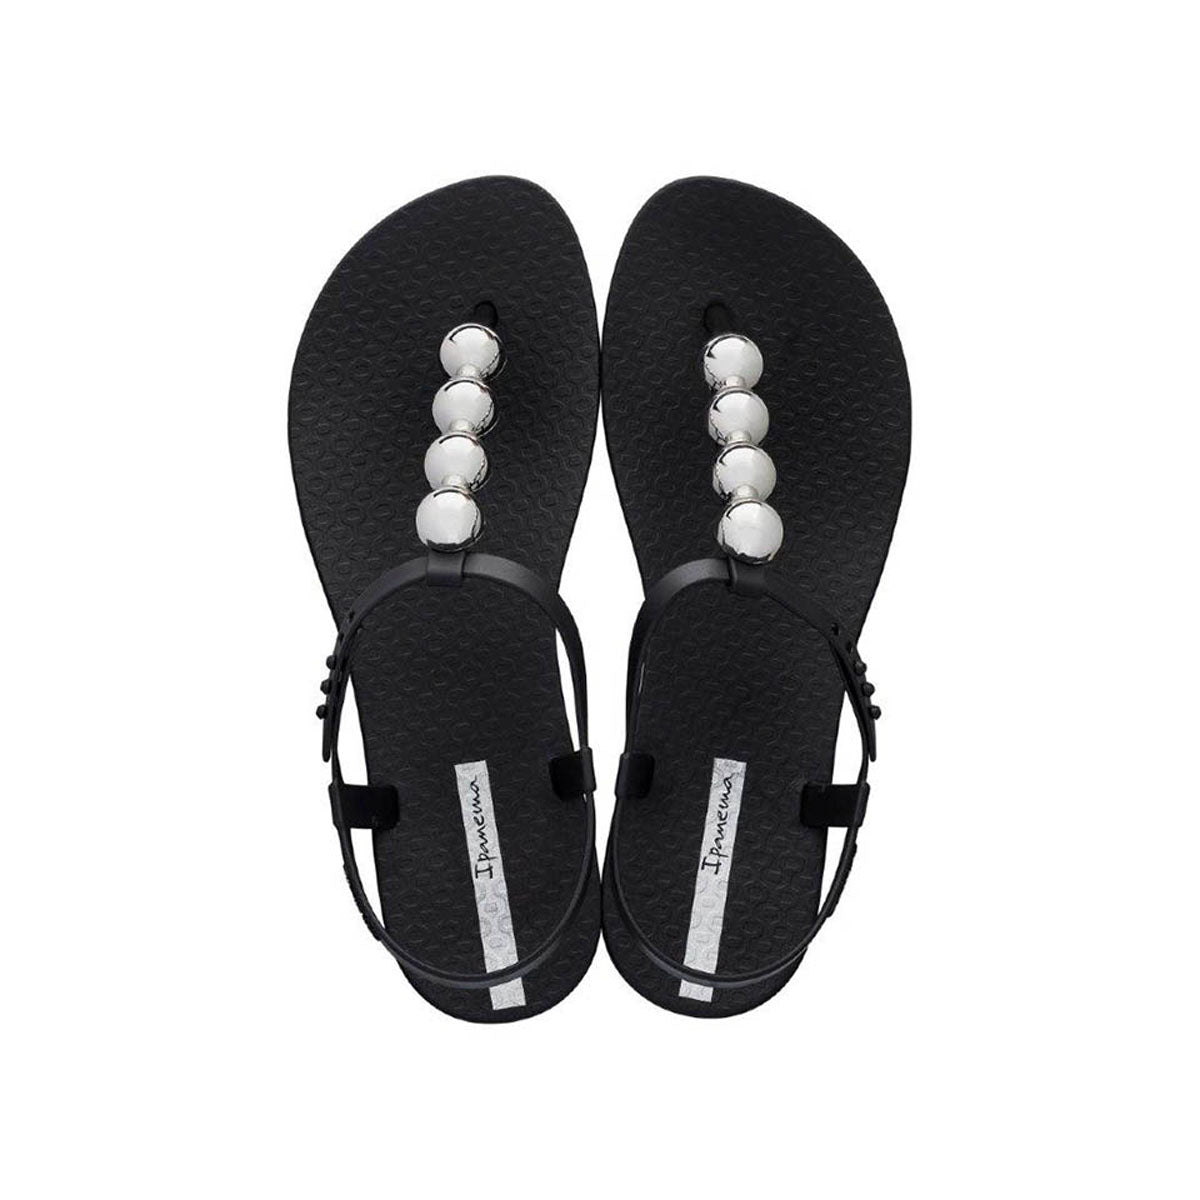 Sandali da Donna - Acquista Online i Nuovi Modelli | PittaRosso